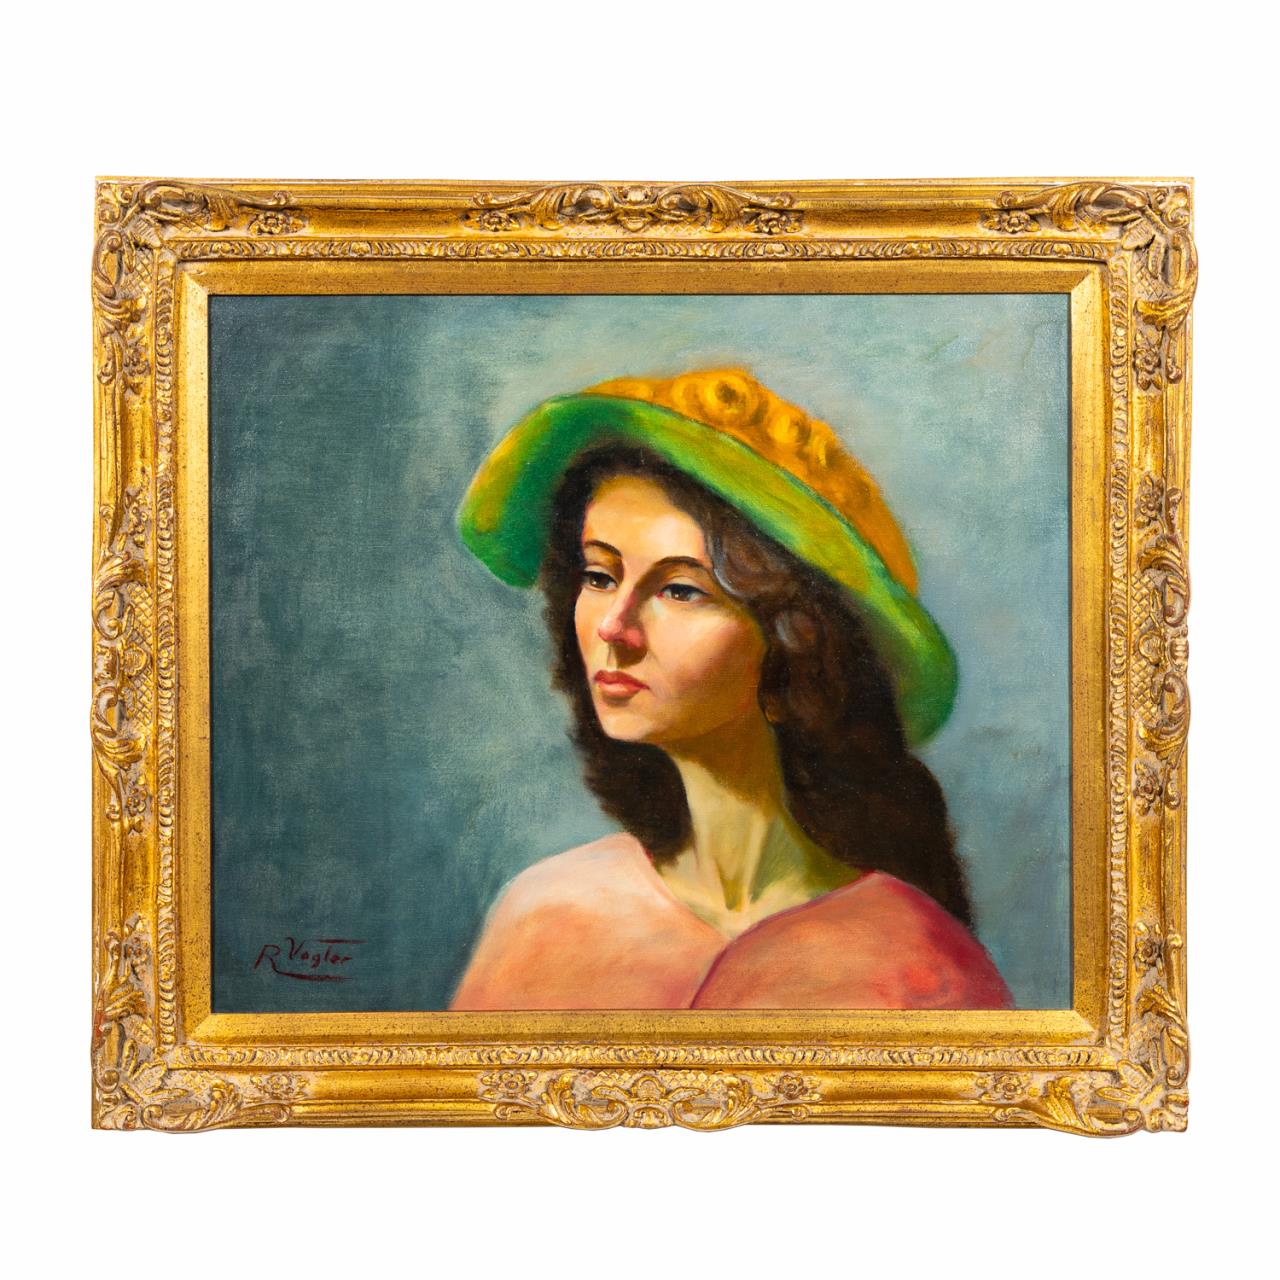 R, VOGLER, PORTRAIT OF A LADY IN GREEN